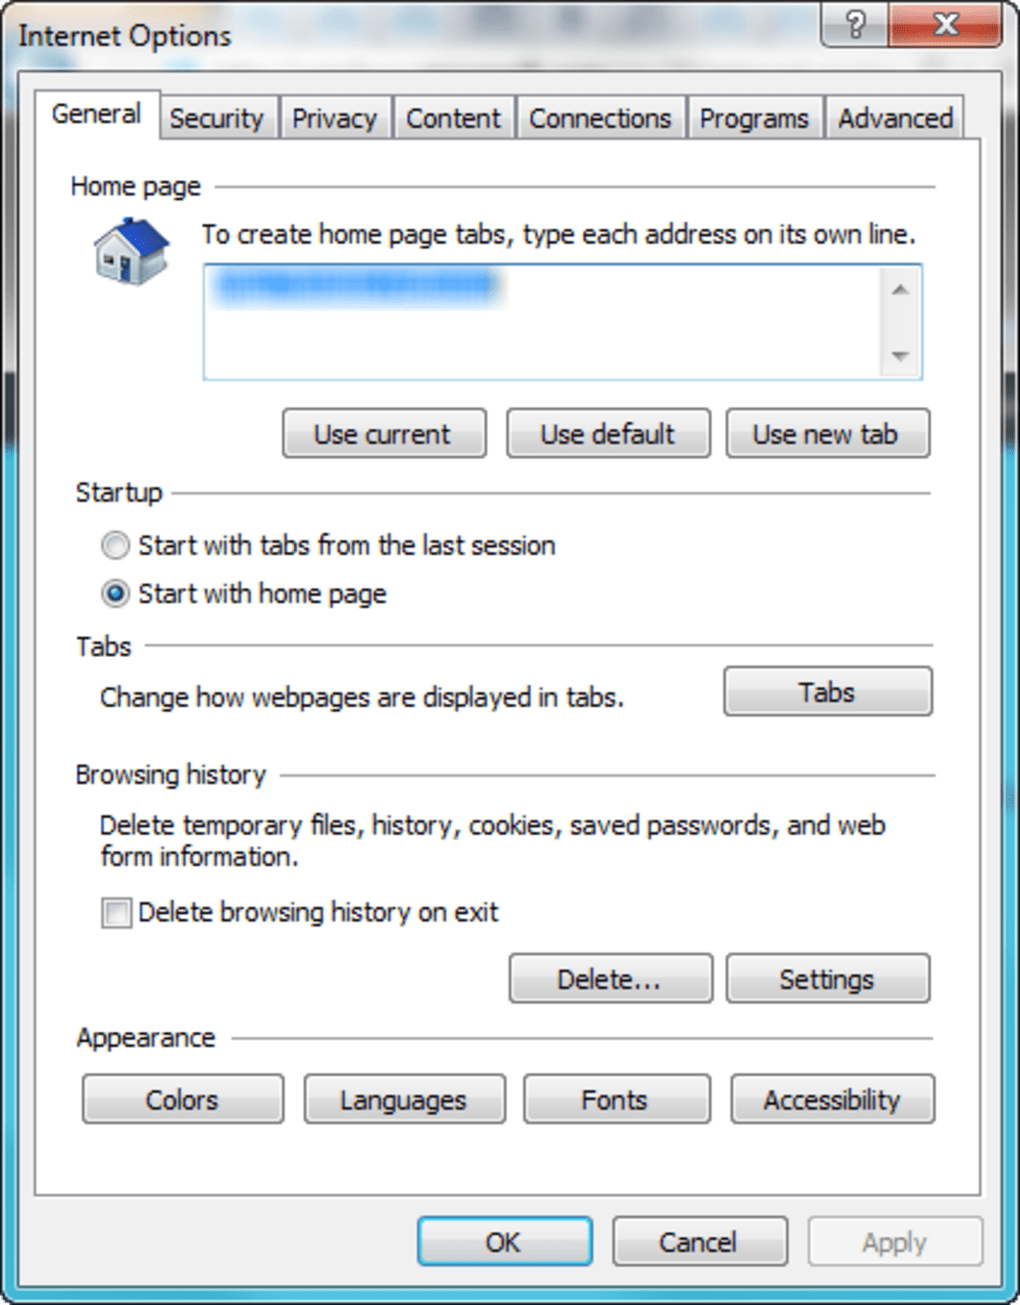 internet explorer 11 for windows 10 updates